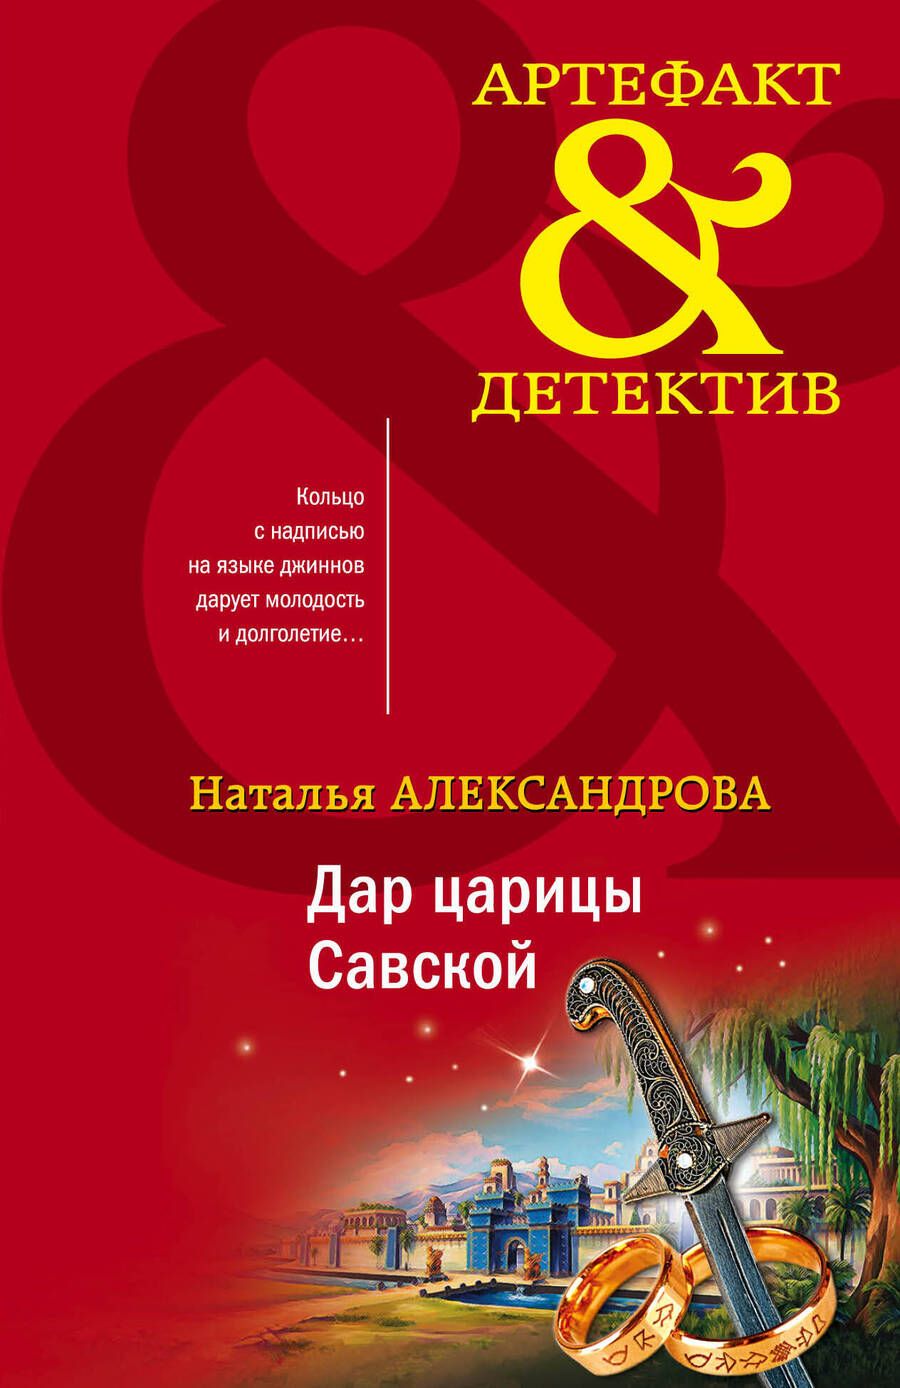 Обложка книги "Александрова: Дар царицы Савской"